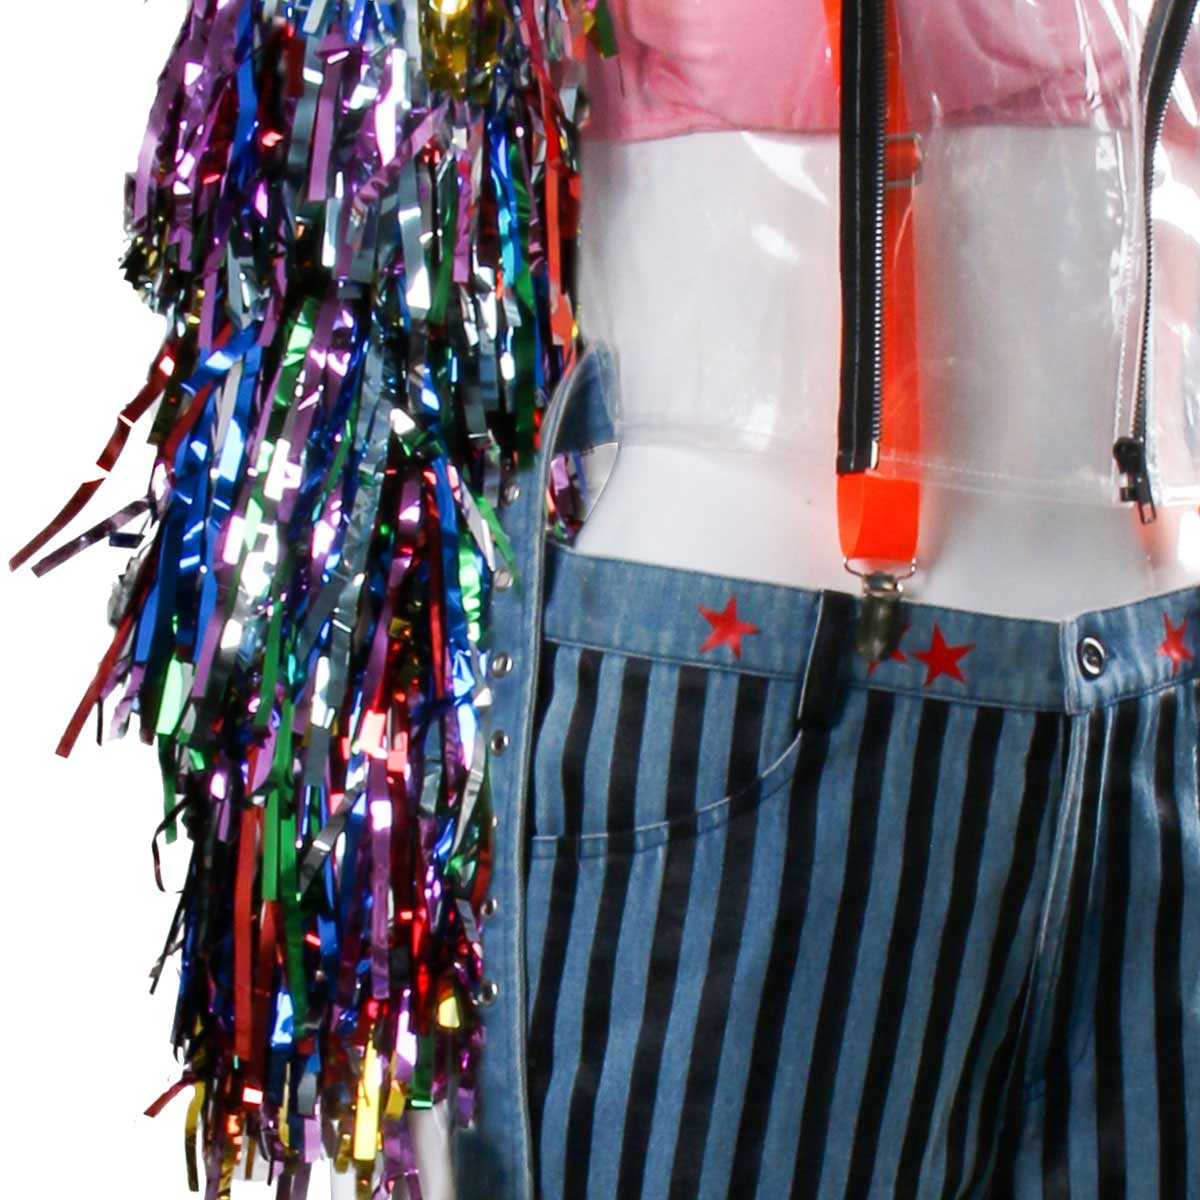 Birds Of Prey Harley Quinn Cosplay Costume Set With Neon Orange Suspenders